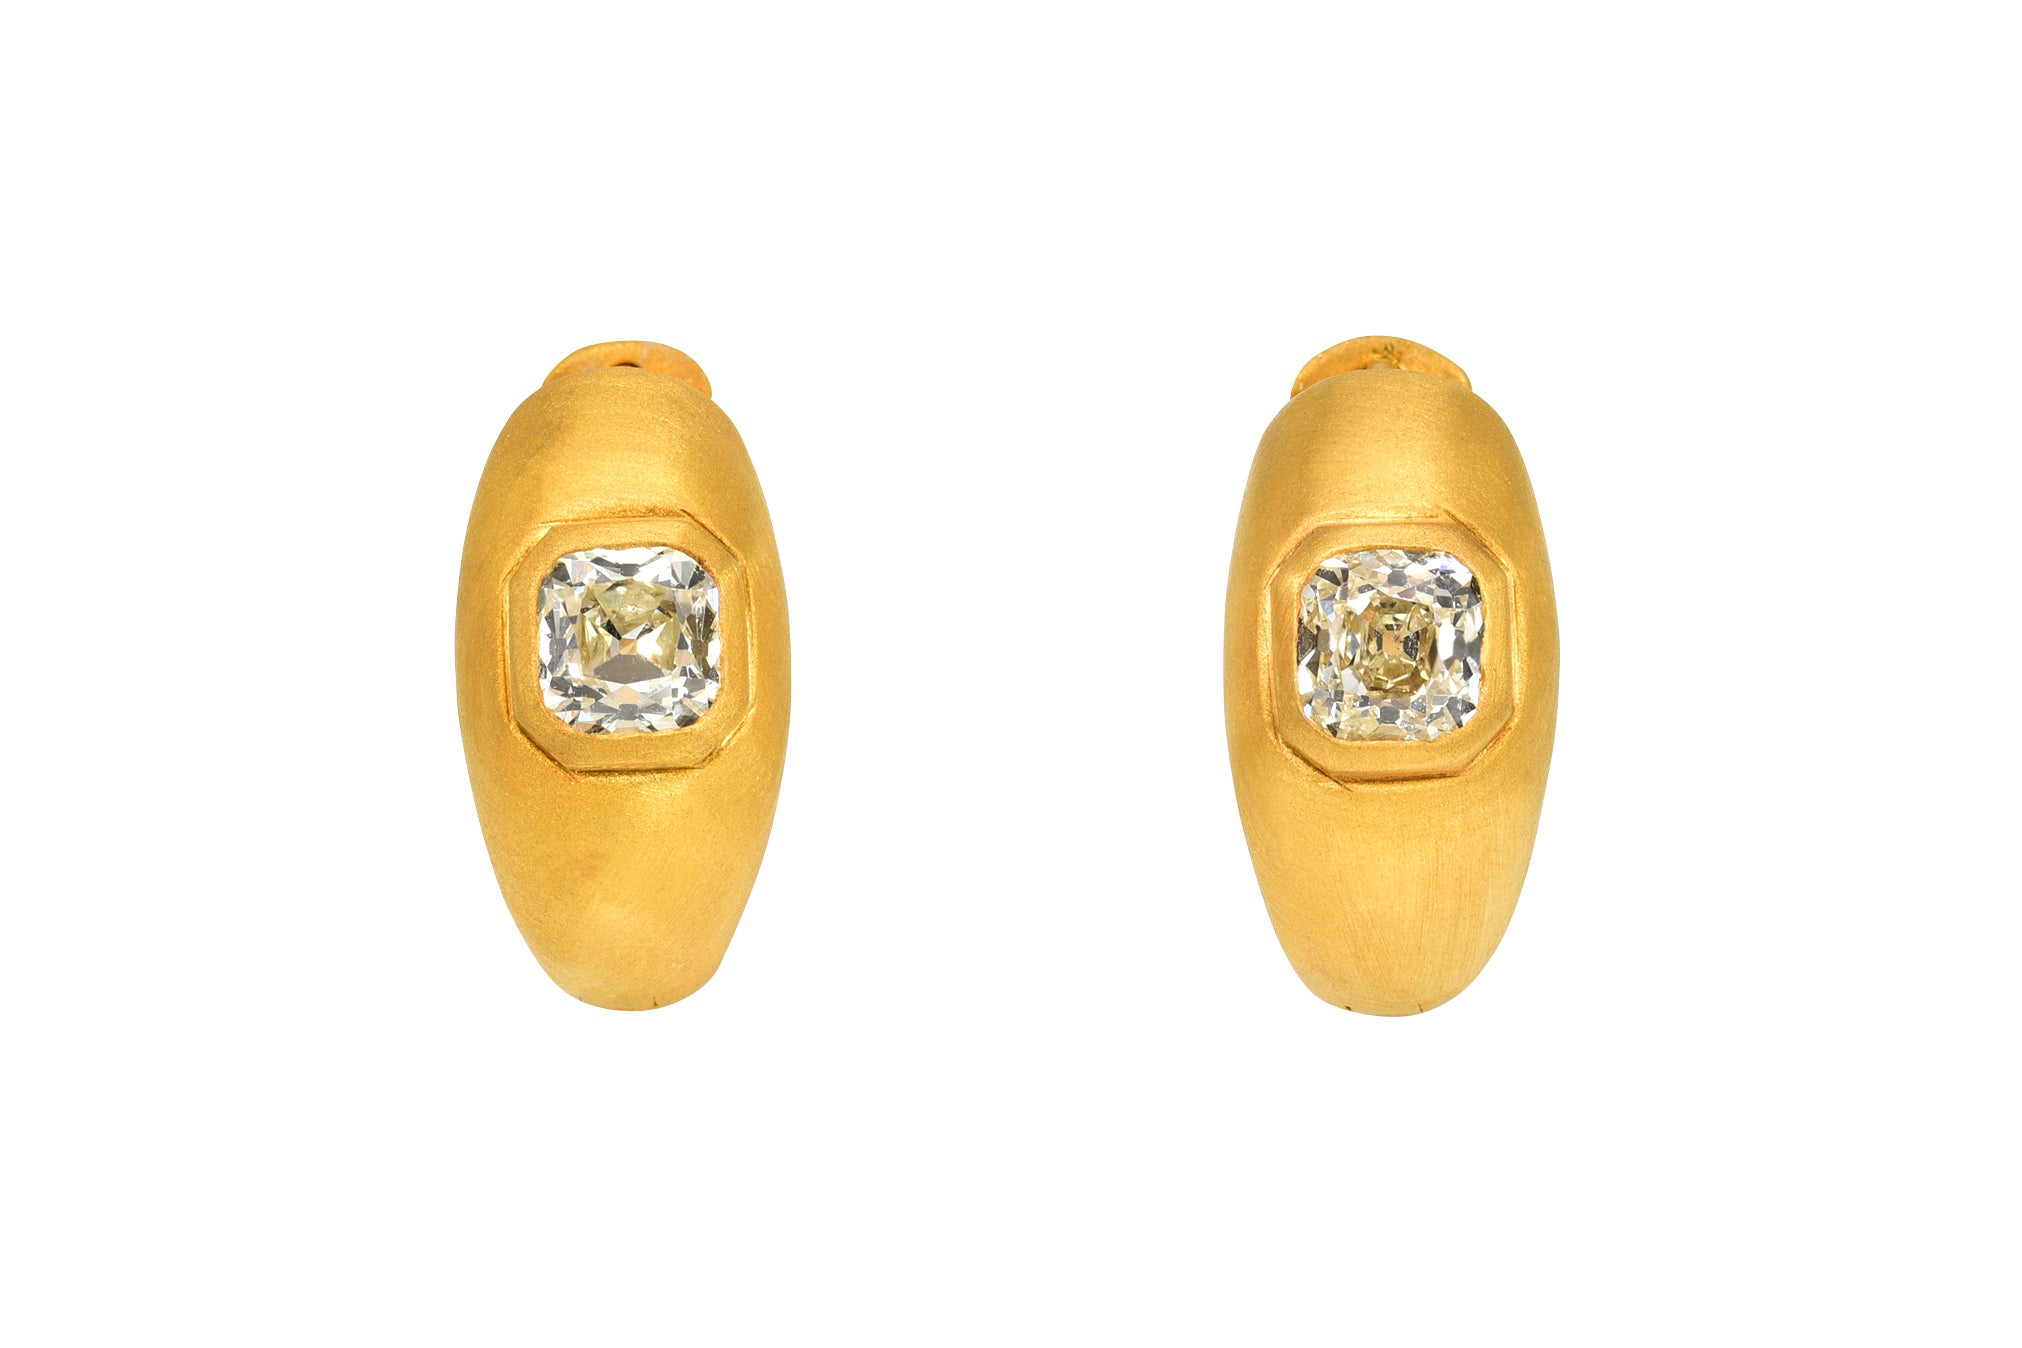 Darius Jewels one of a kind antique Peruzzi diamond ring hoops Fairmined gold 